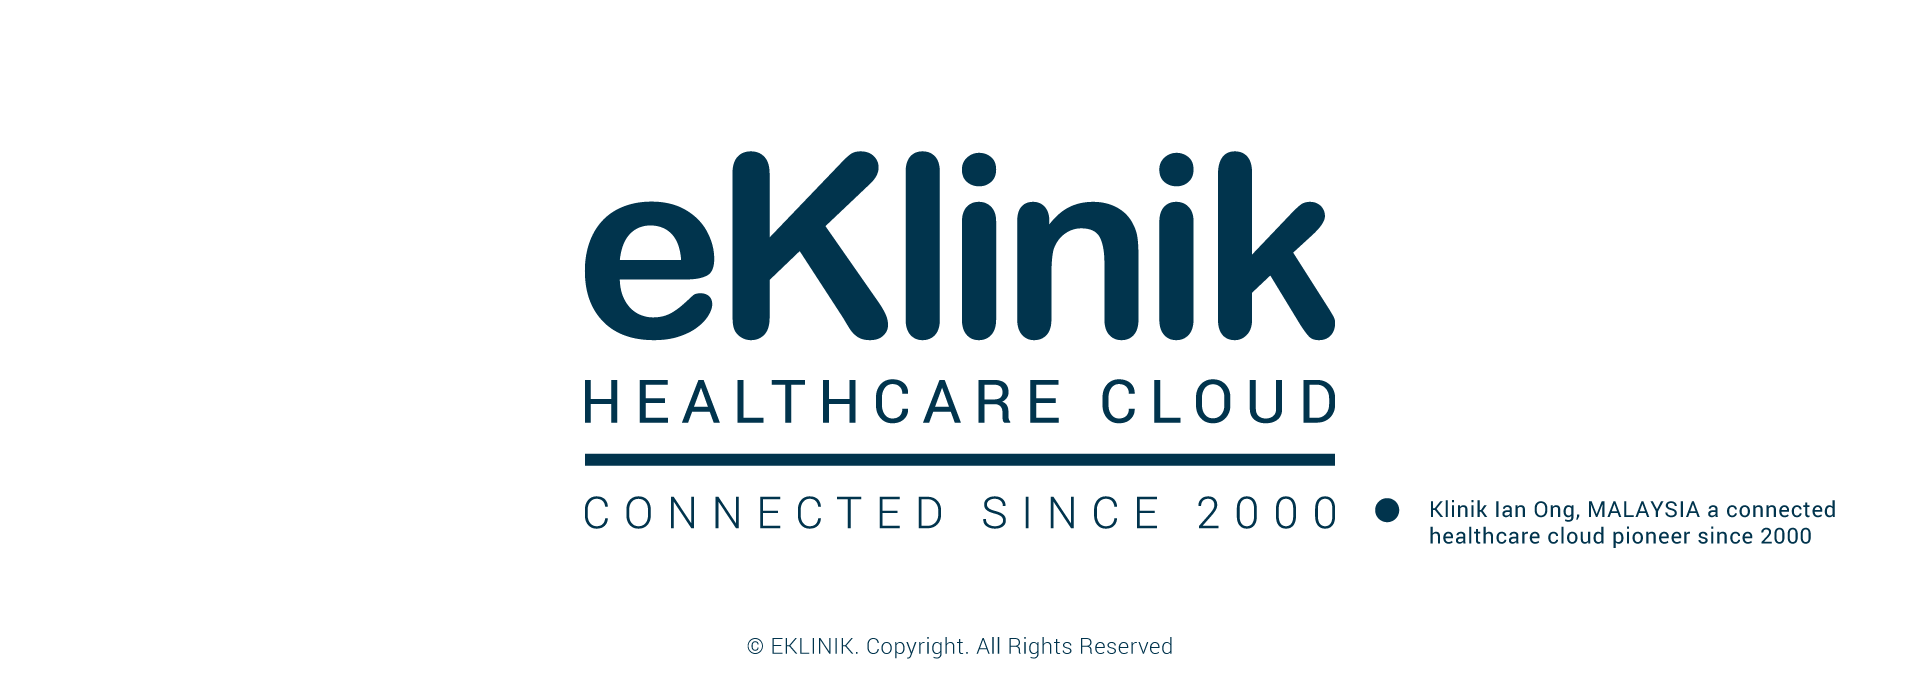 eKlinik Healthcare Cloud